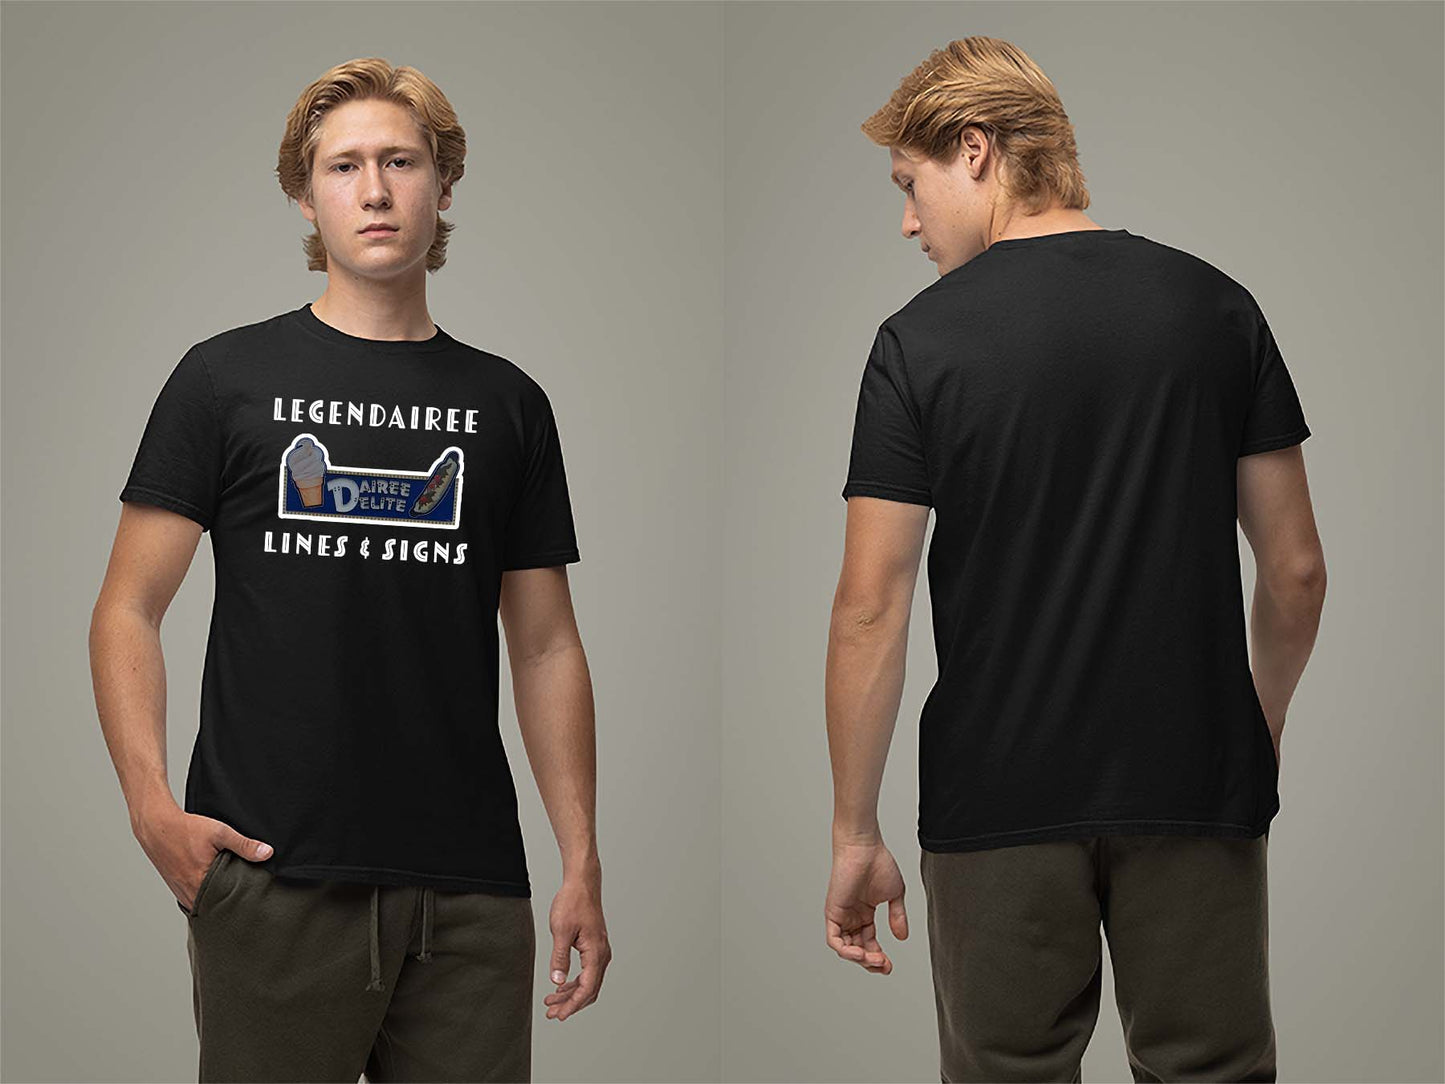 Legendairee T-Shirt Small Black